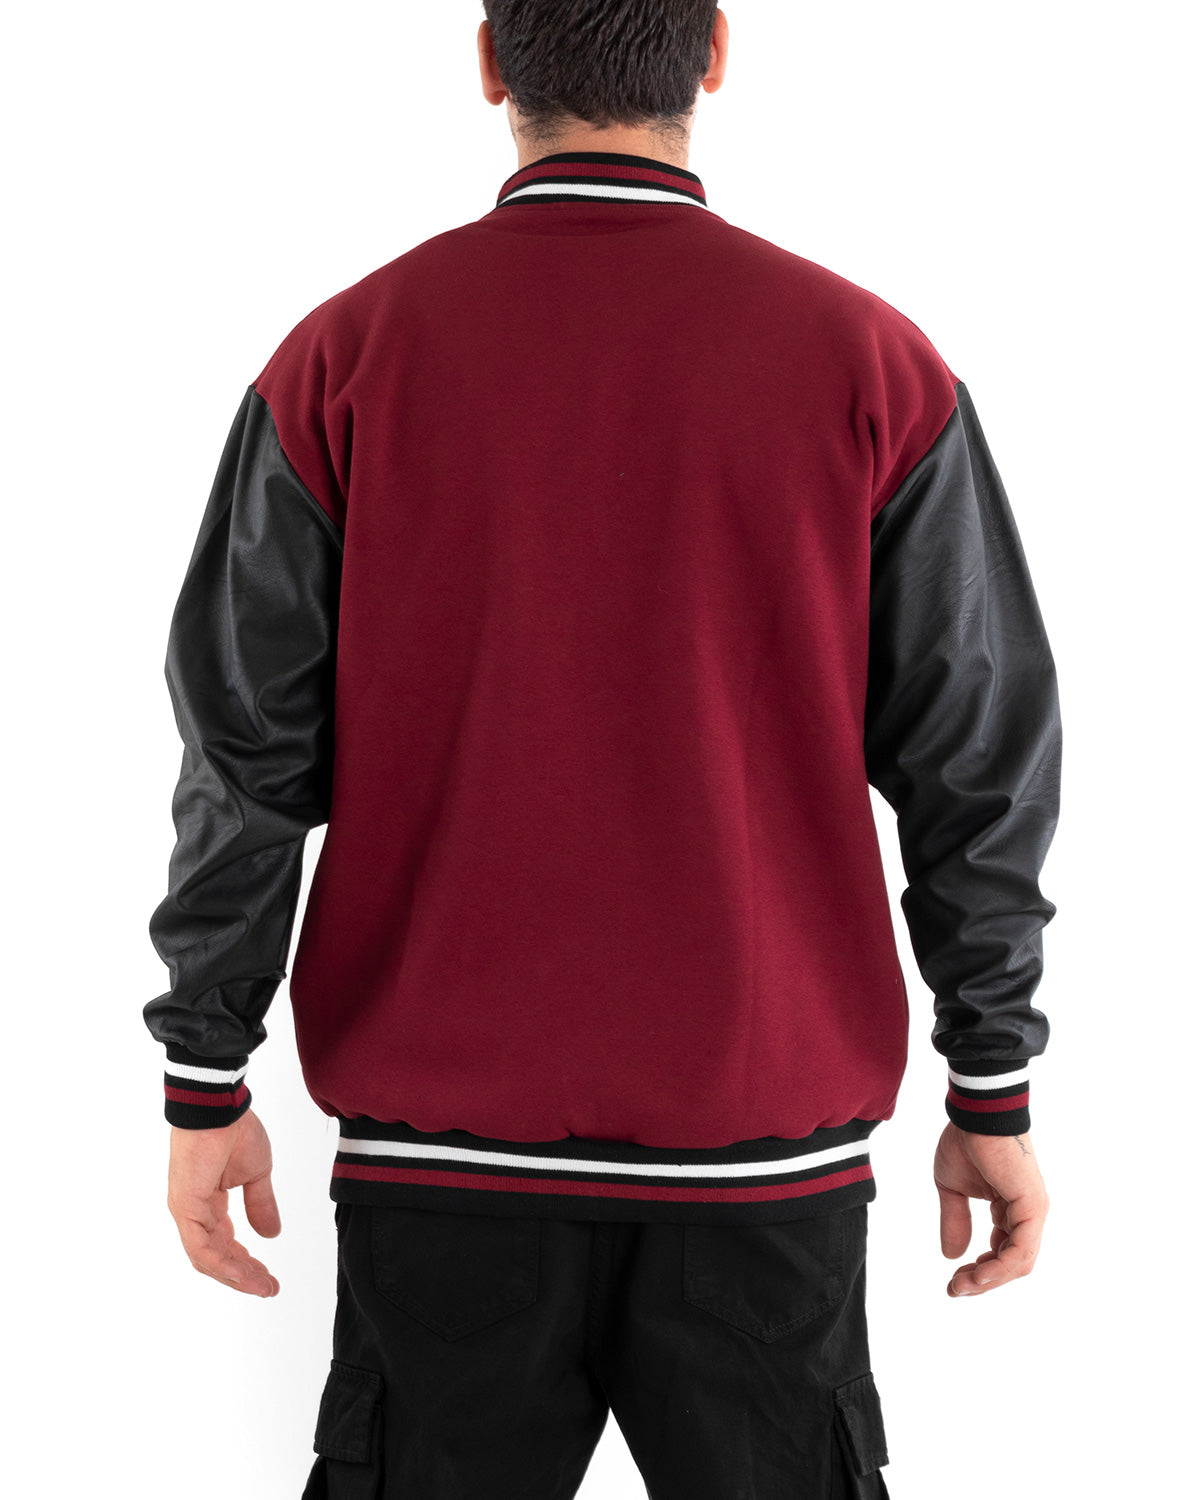 Men's College Varsity Jacket Sleeve Faux Leather Two-Tone Bordeaux Black GIOSAL